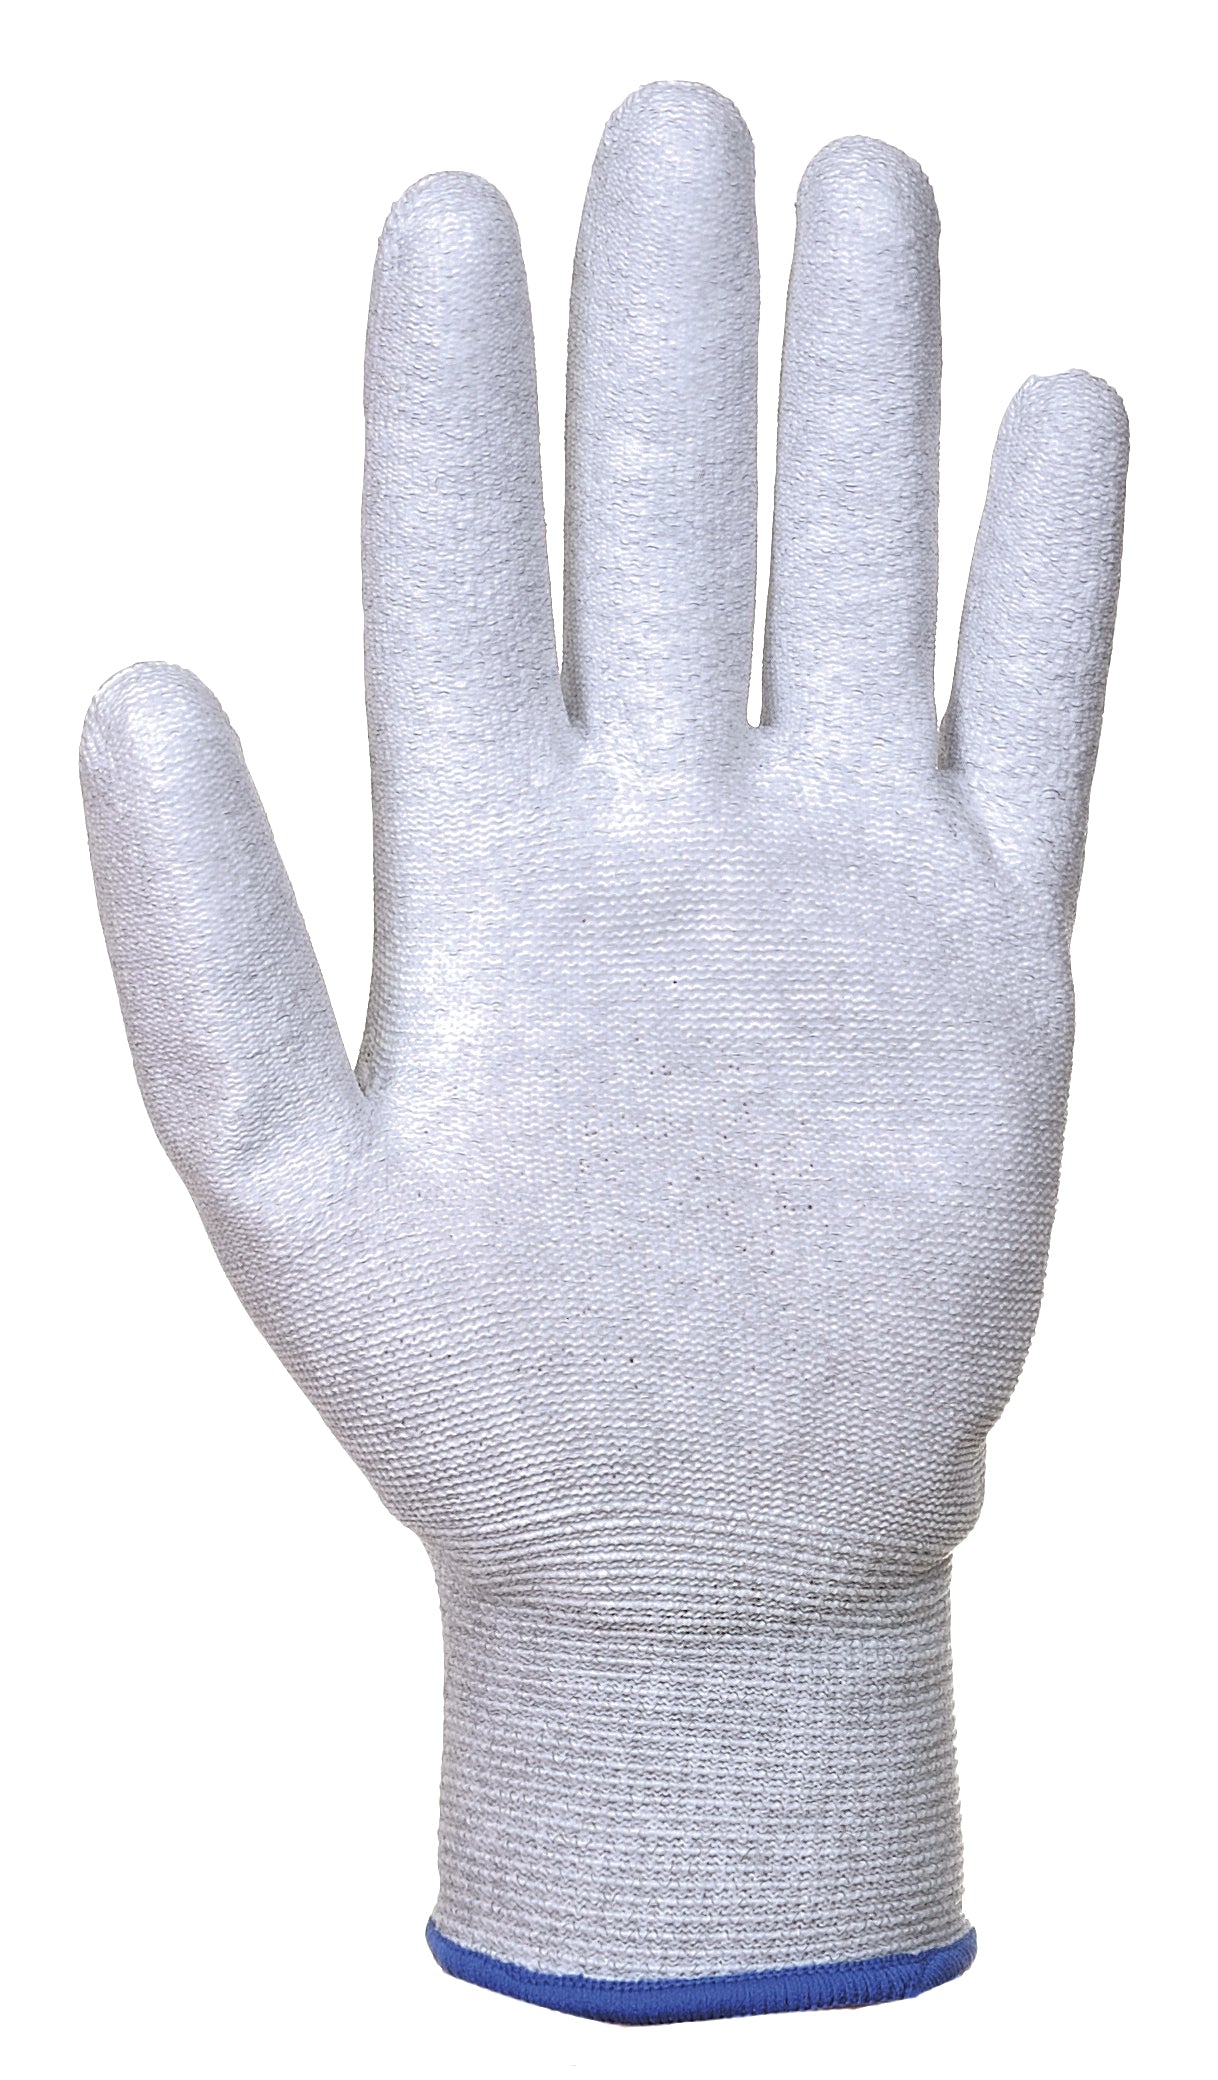 Antistatic PU Palm Glove Grey - A199 Palm